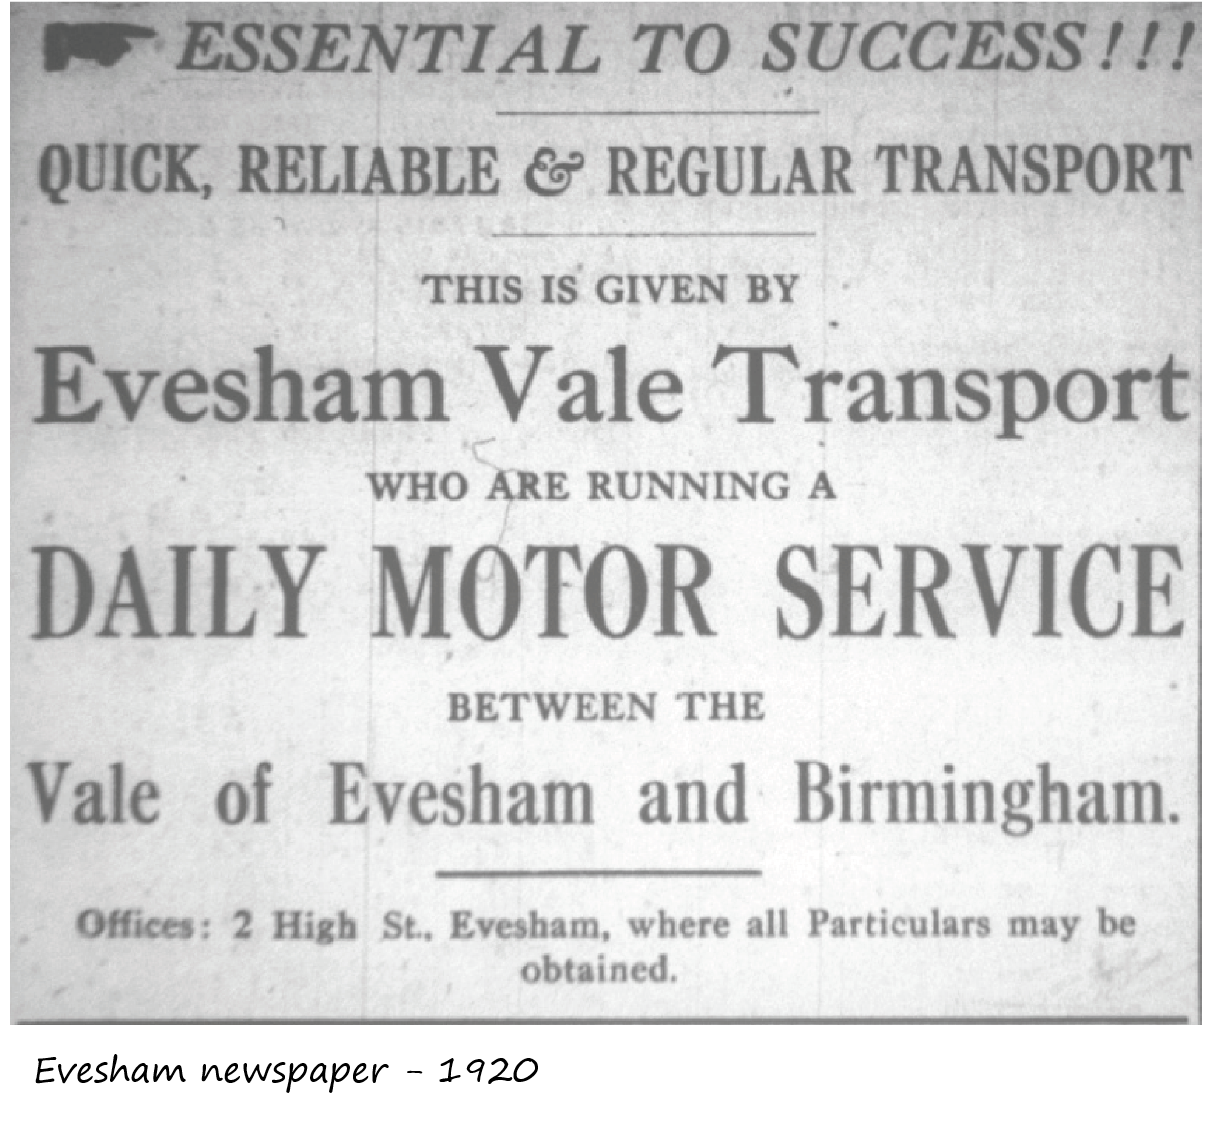 Evesham Vale Motor Transport ad - 1920